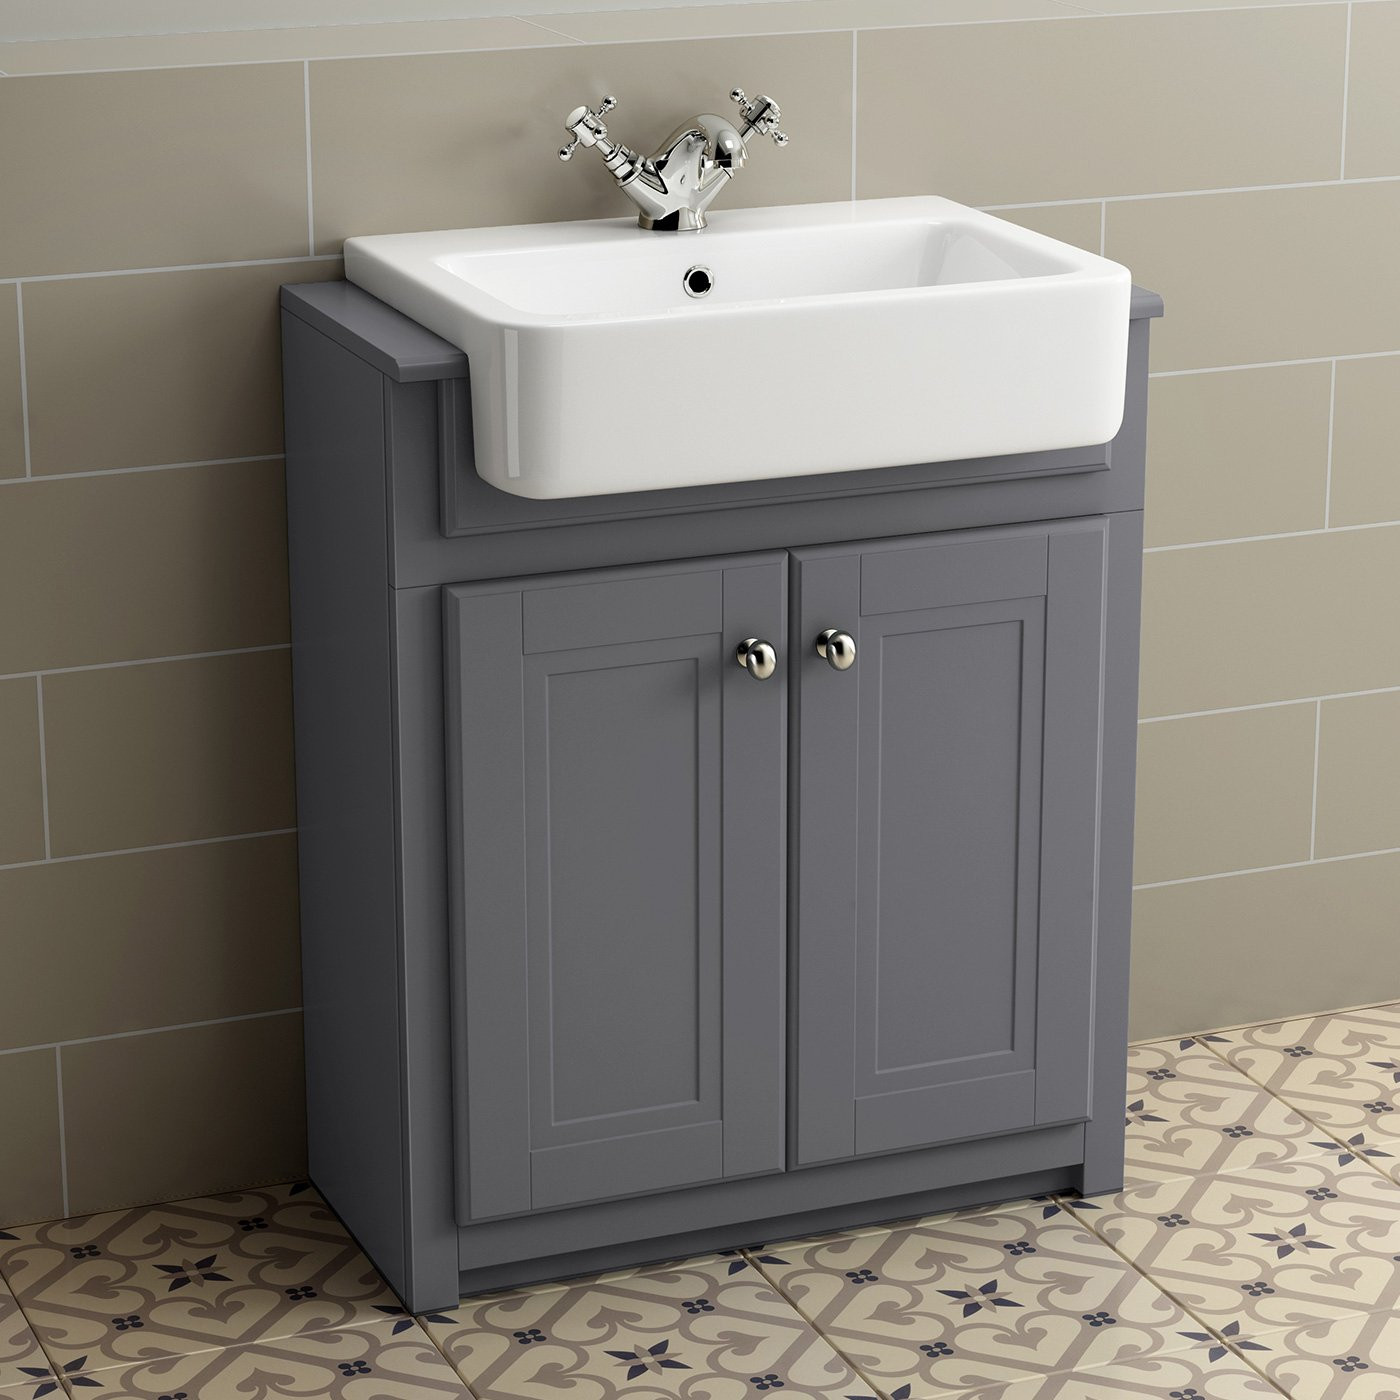 Best ideas about Amazon Bathroom Vanity
. Save or Pin Amazon Bathroom Vanity Units Now.